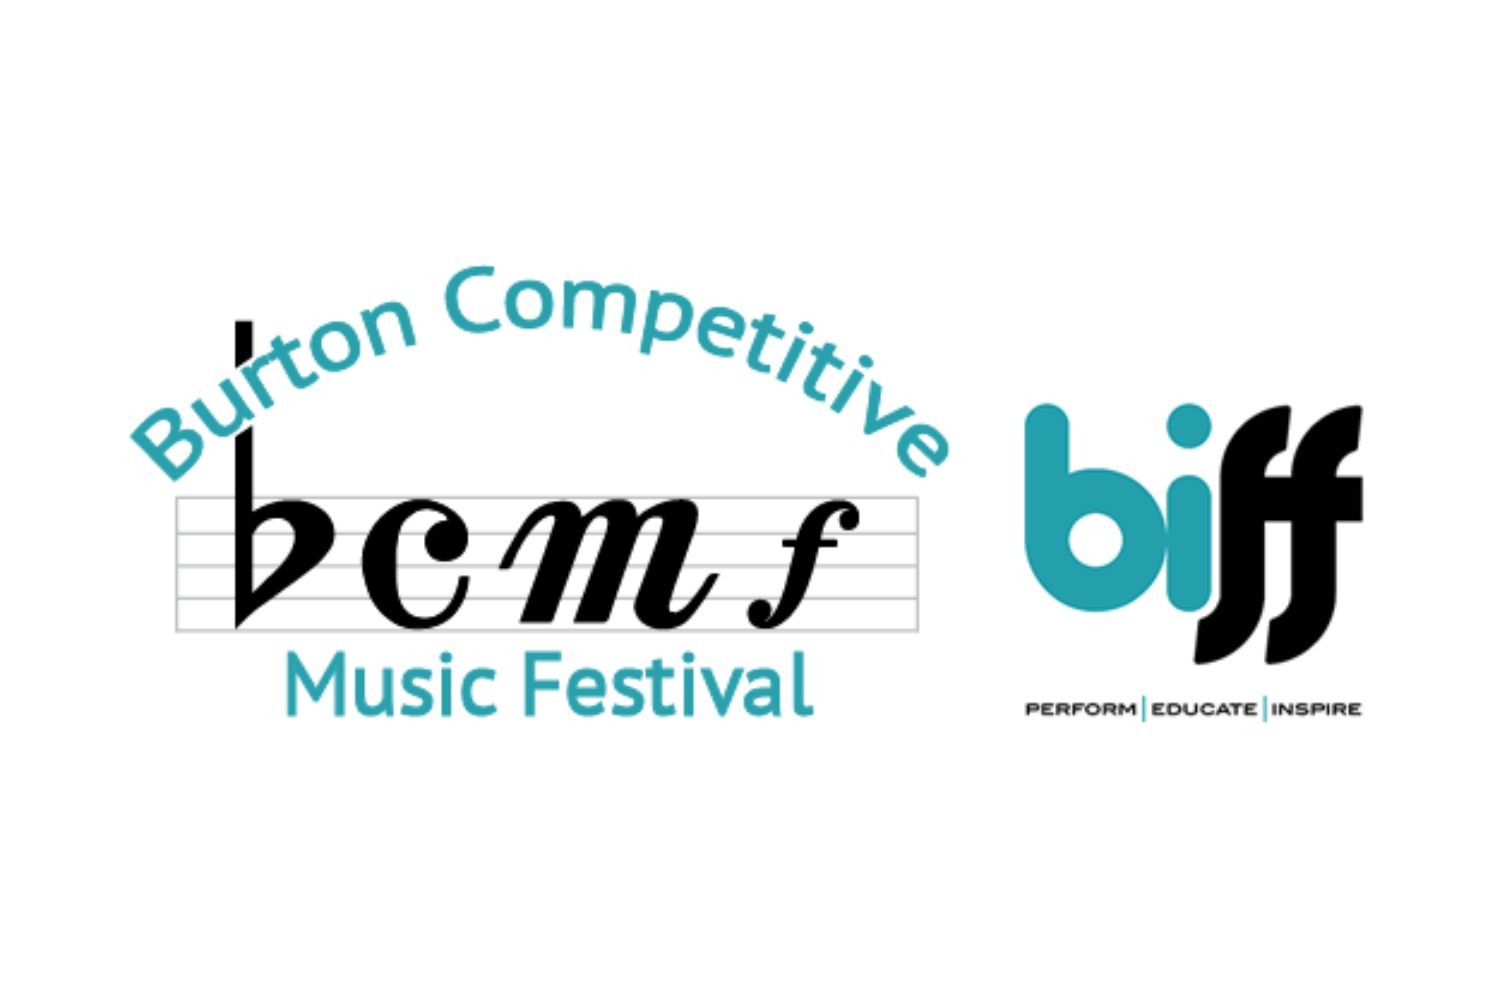 The 21st Burton Competitive Music Festival